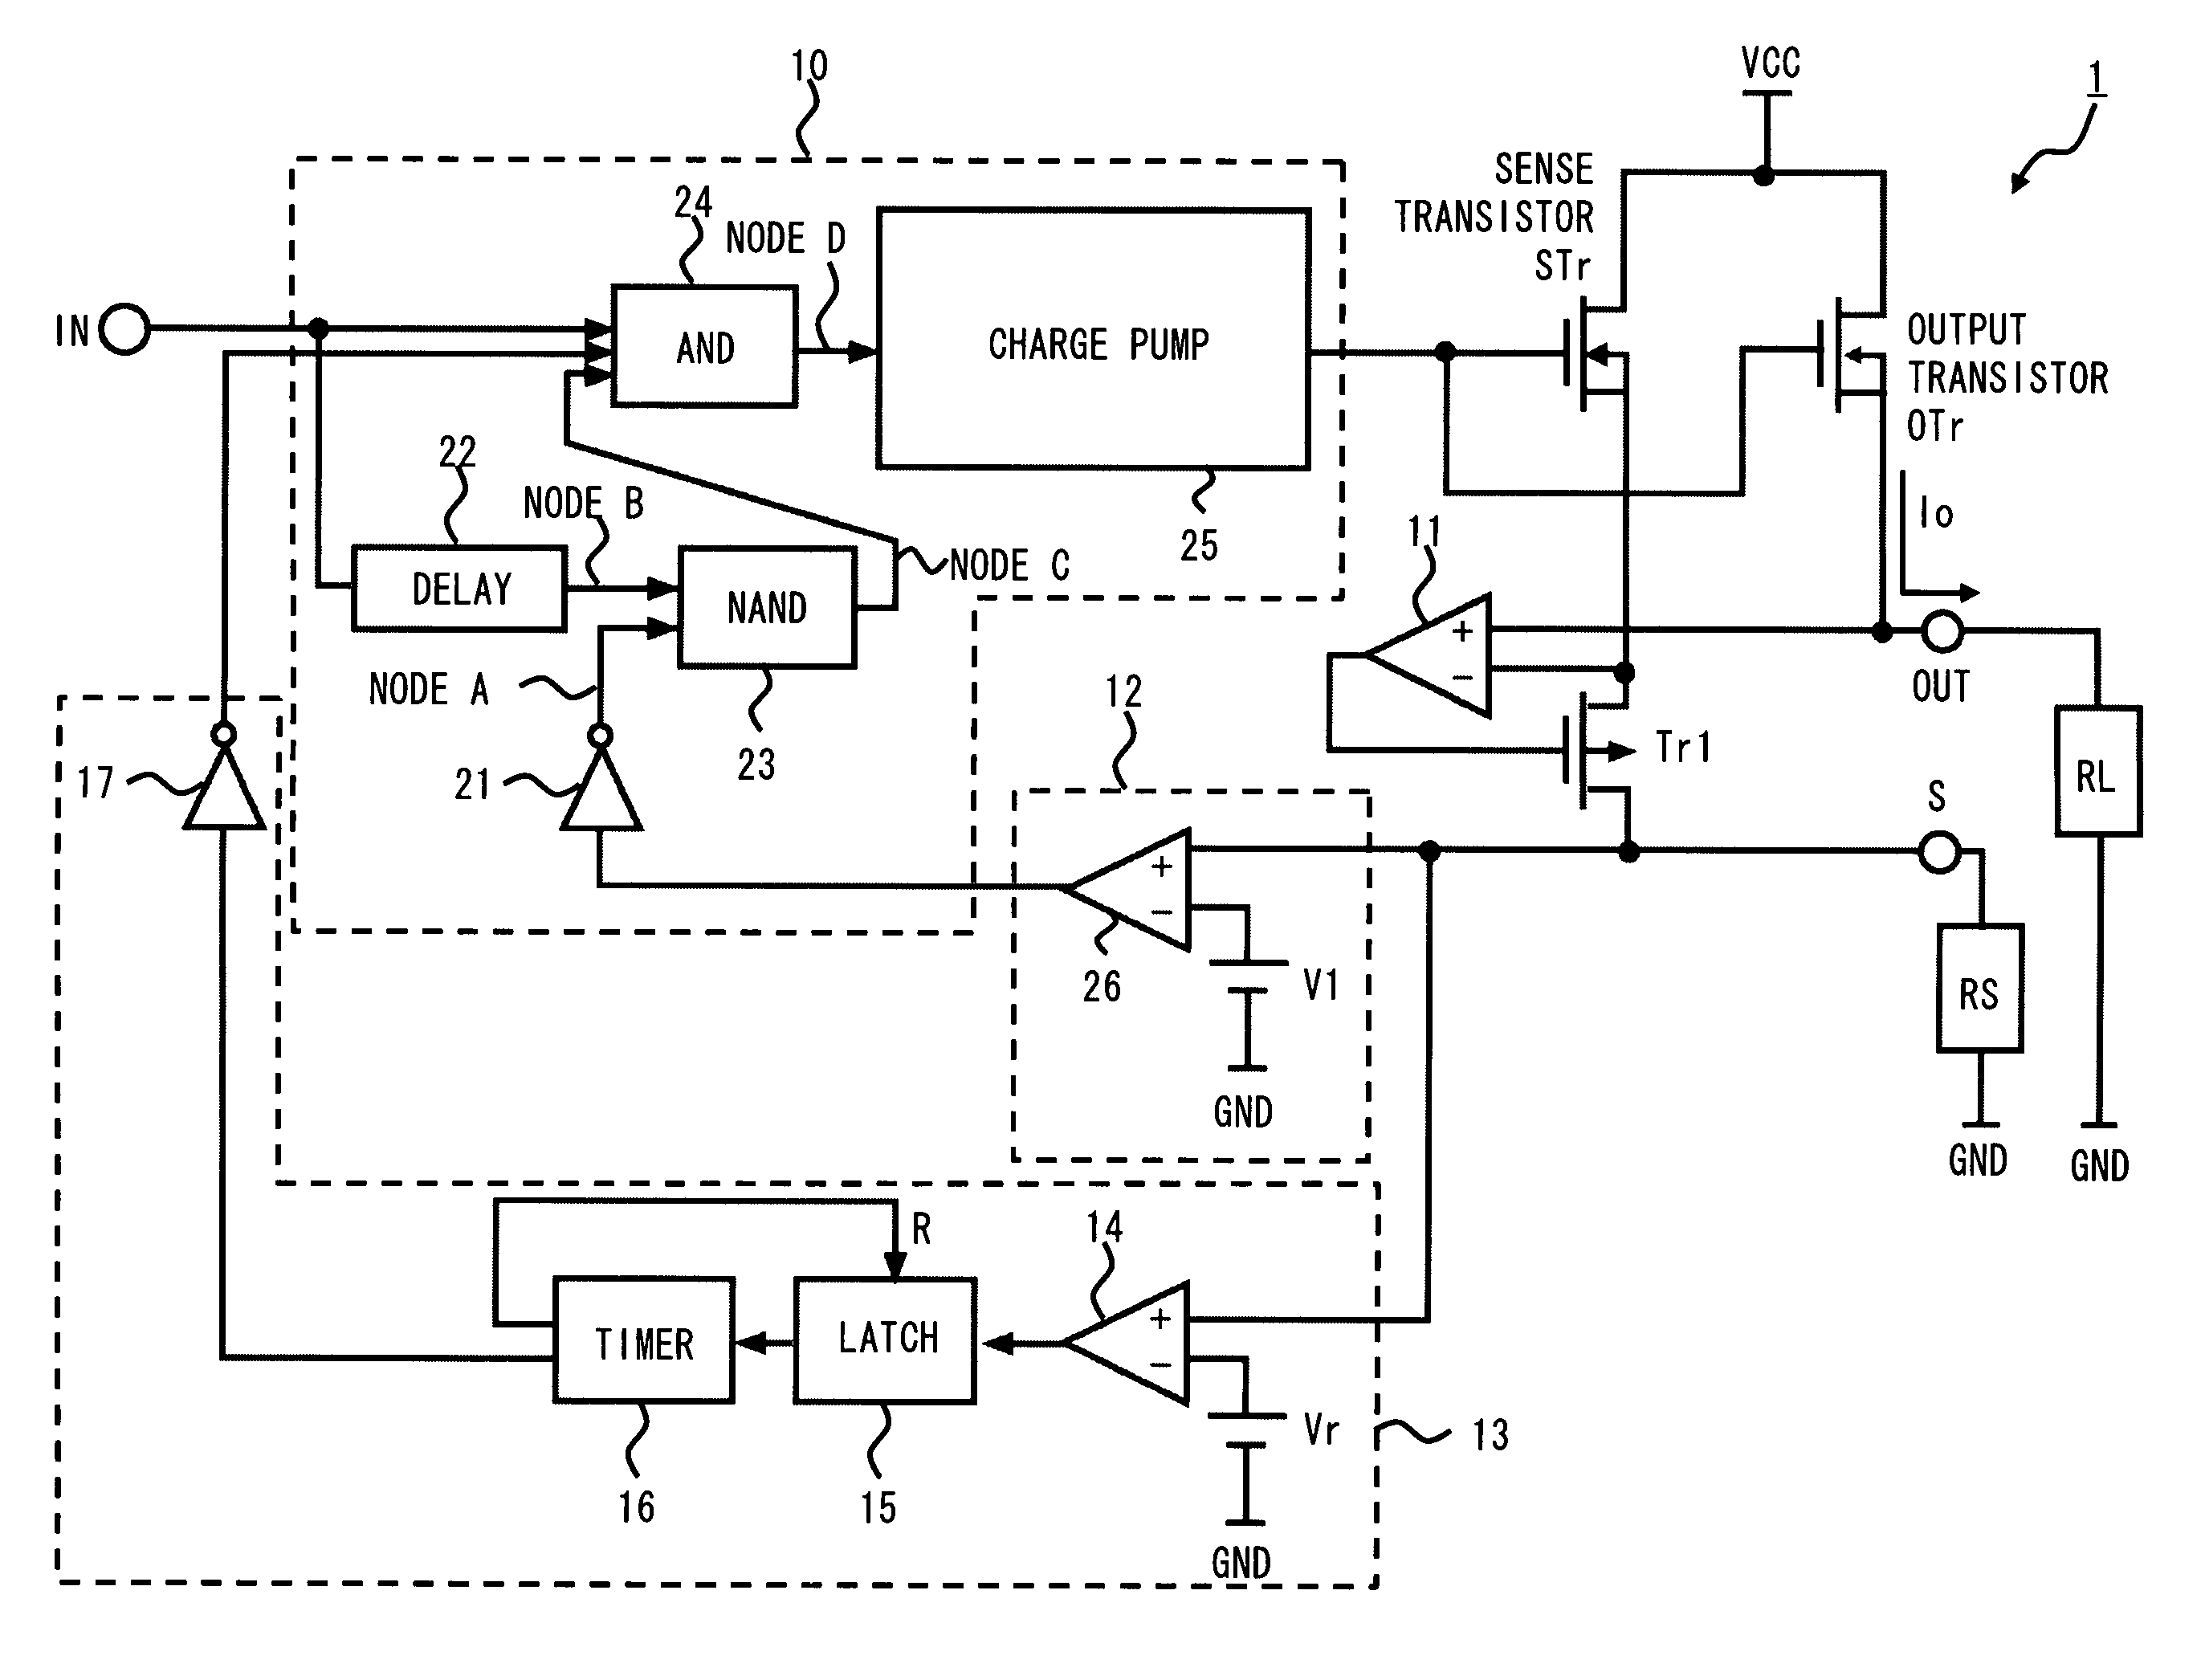 Power switching circuit